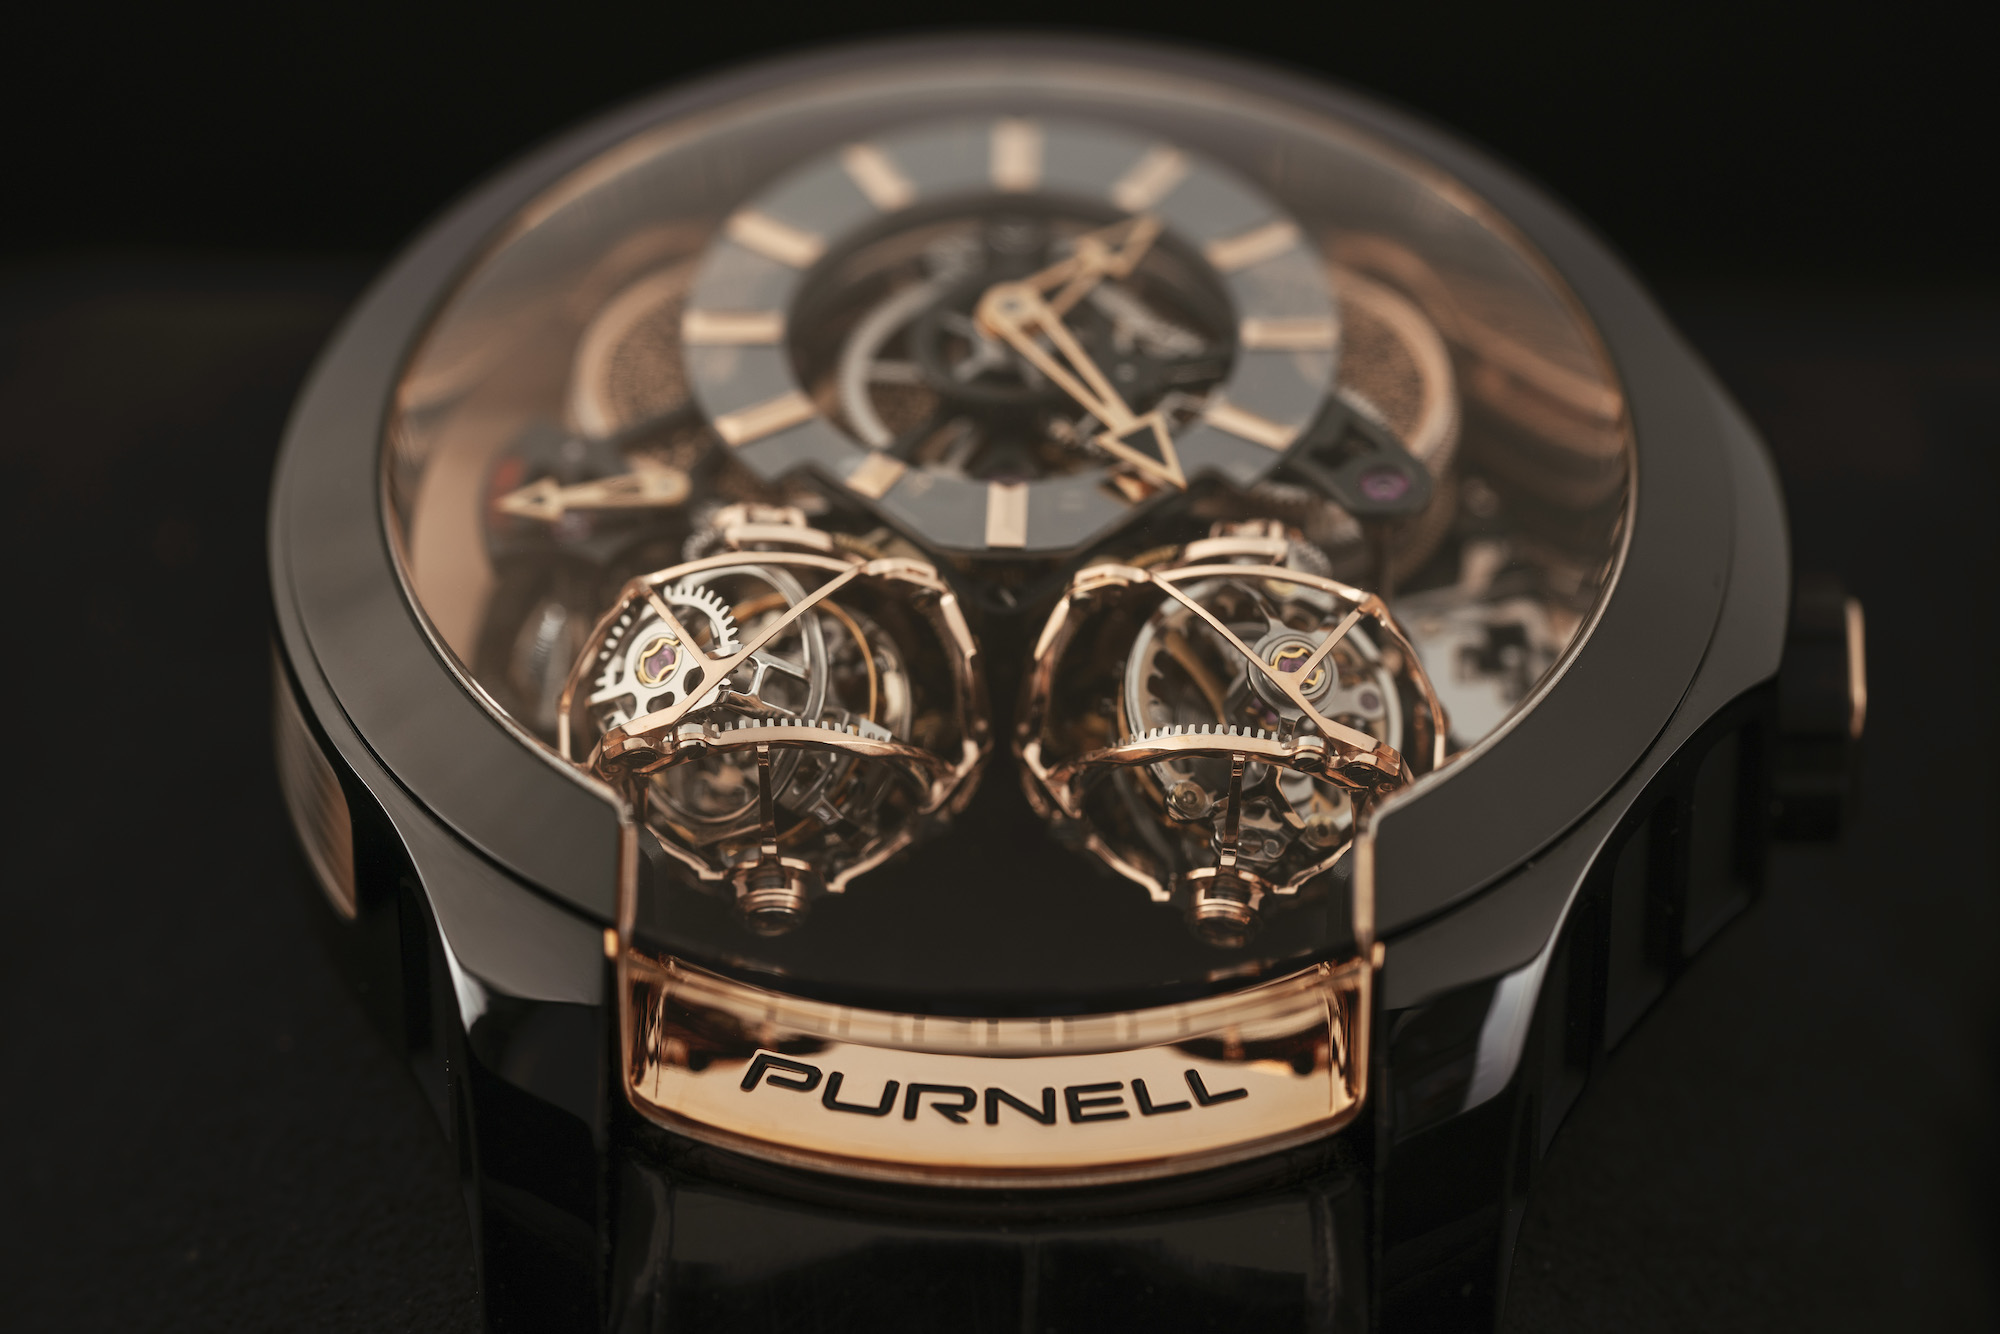 “A Purnell watch is like kinetic art”